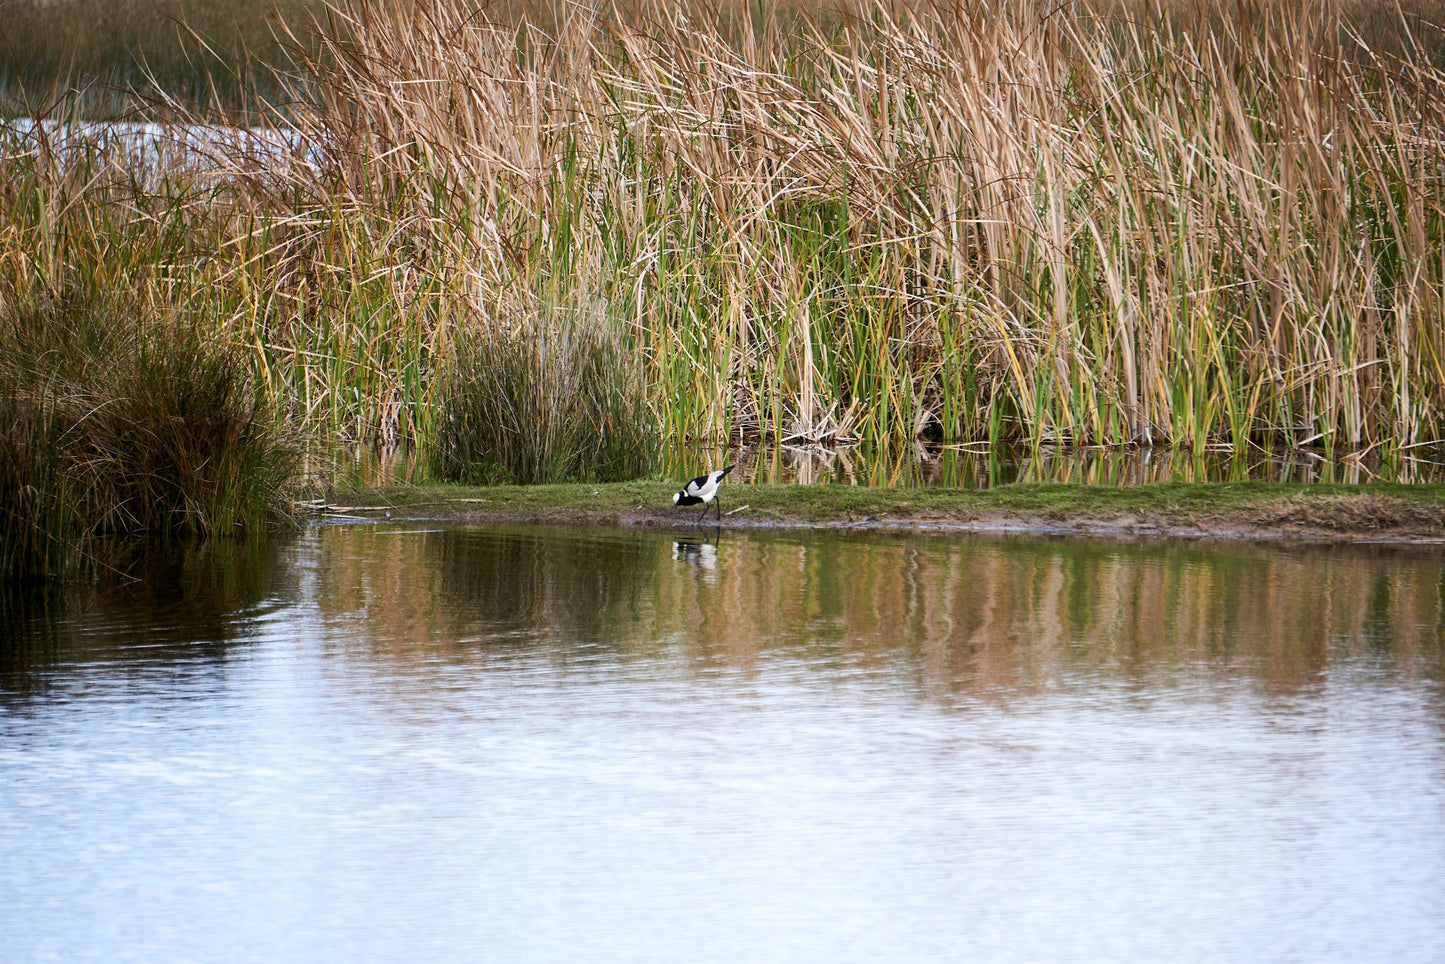  False Bay Nature Reserve - Rondevlei Bird Sanctuary